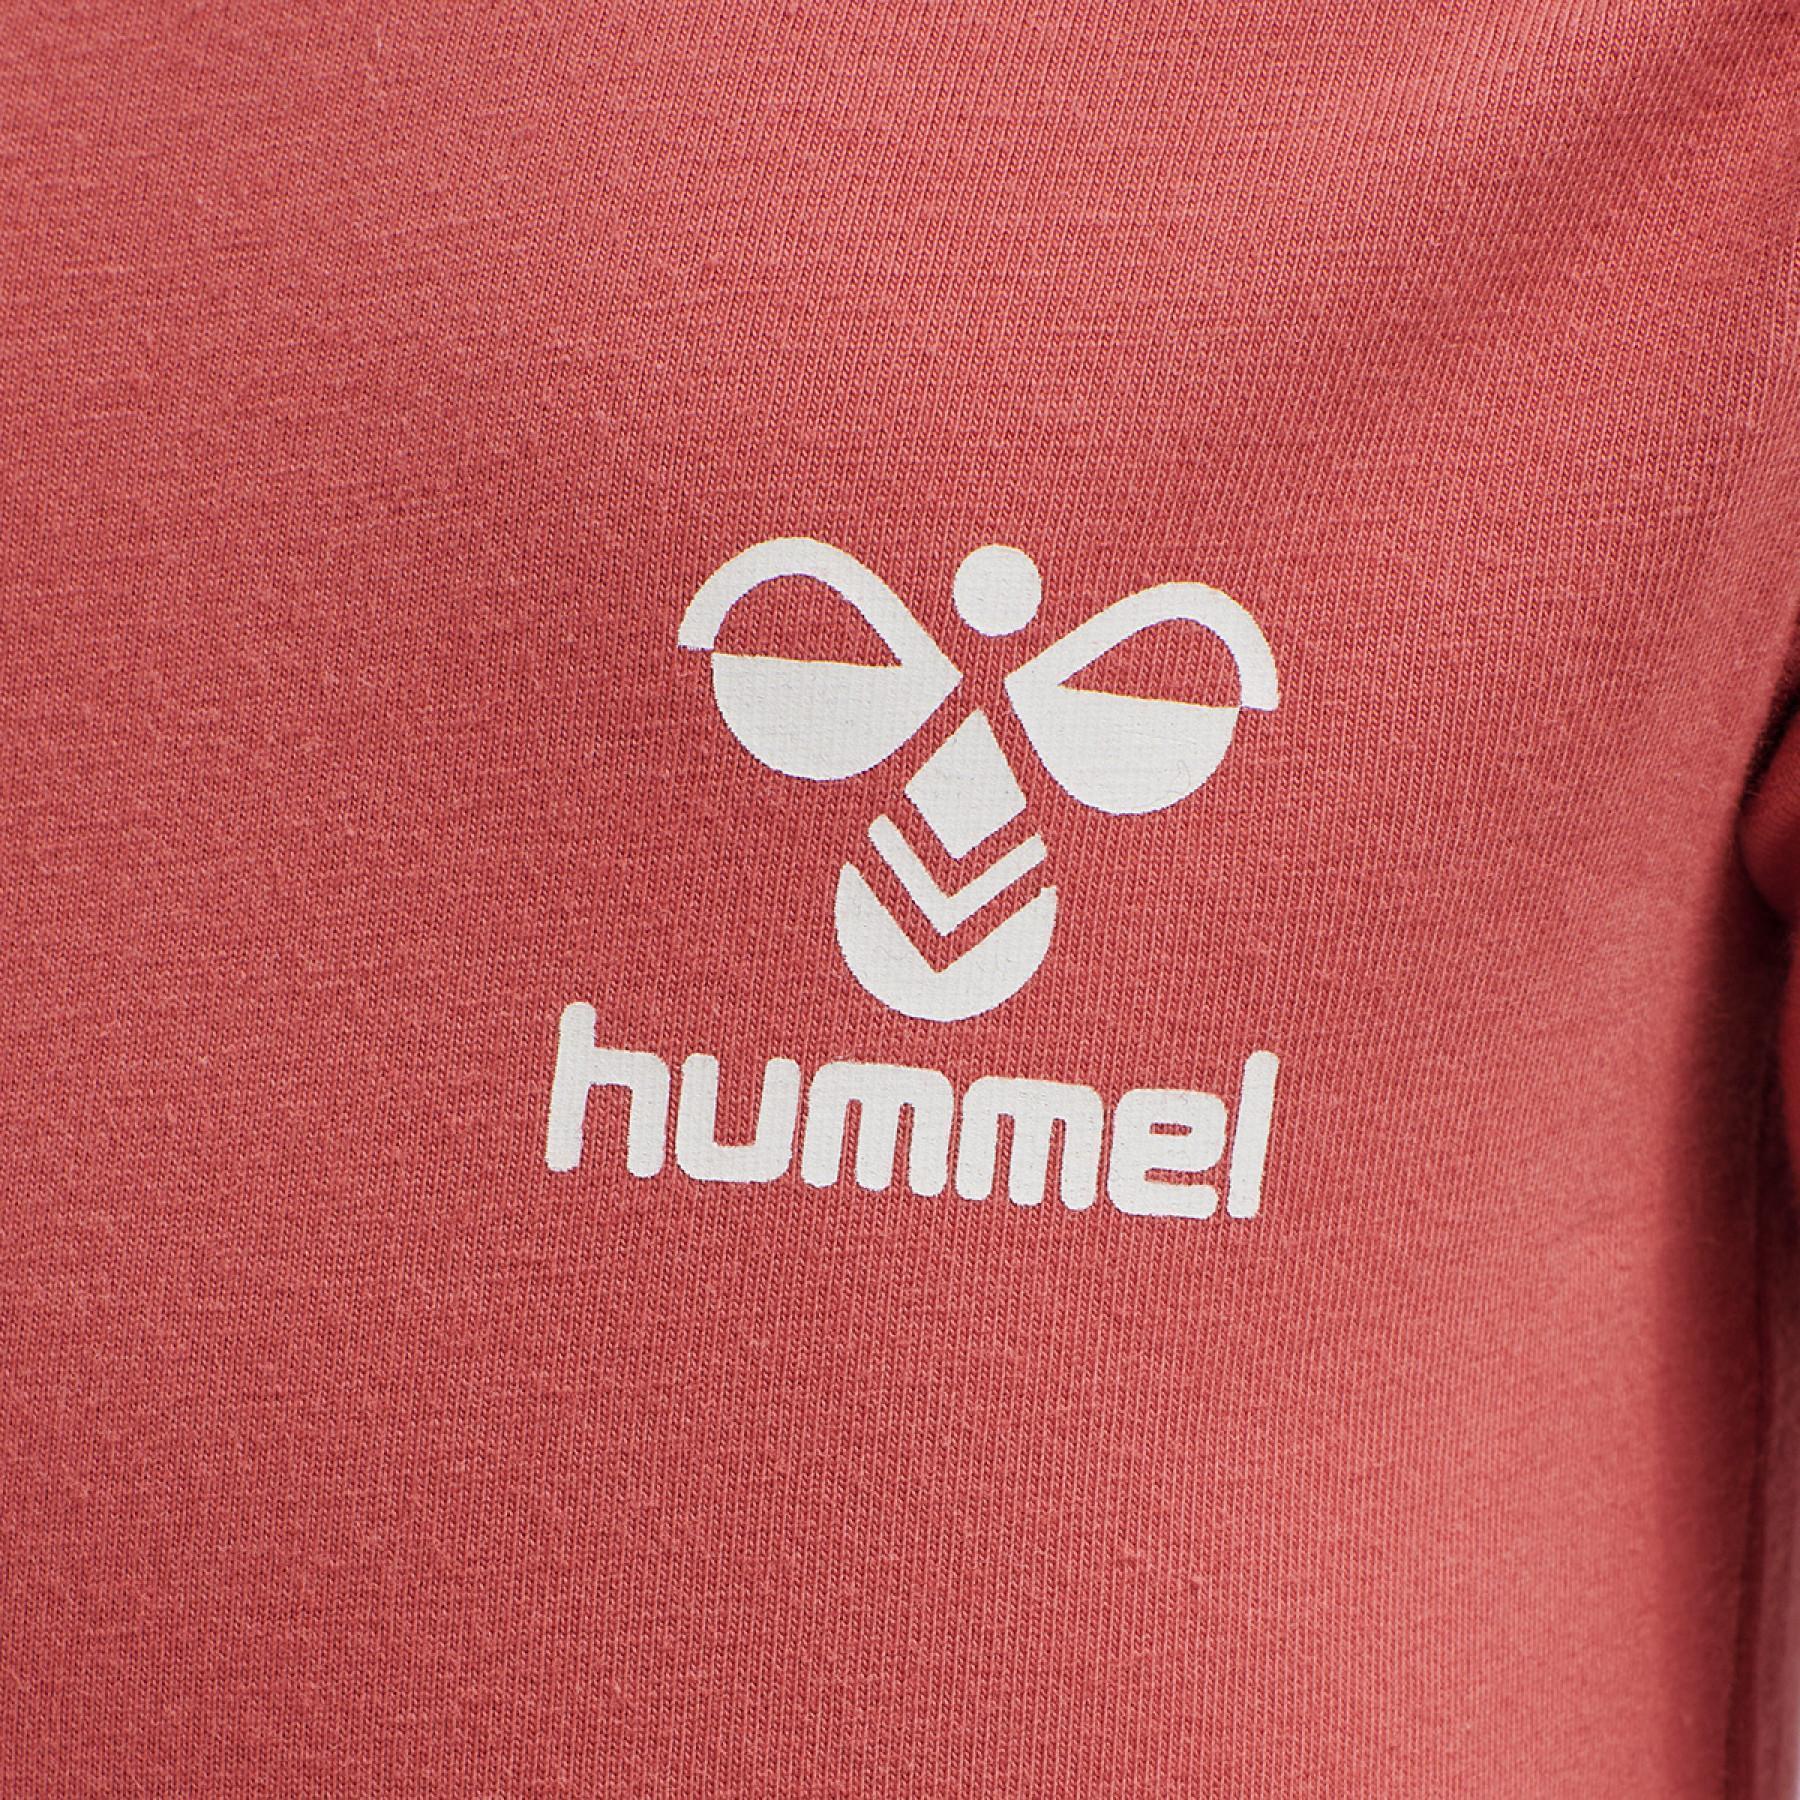 Baby bodysuit long sleeves Hummel hmlmaui